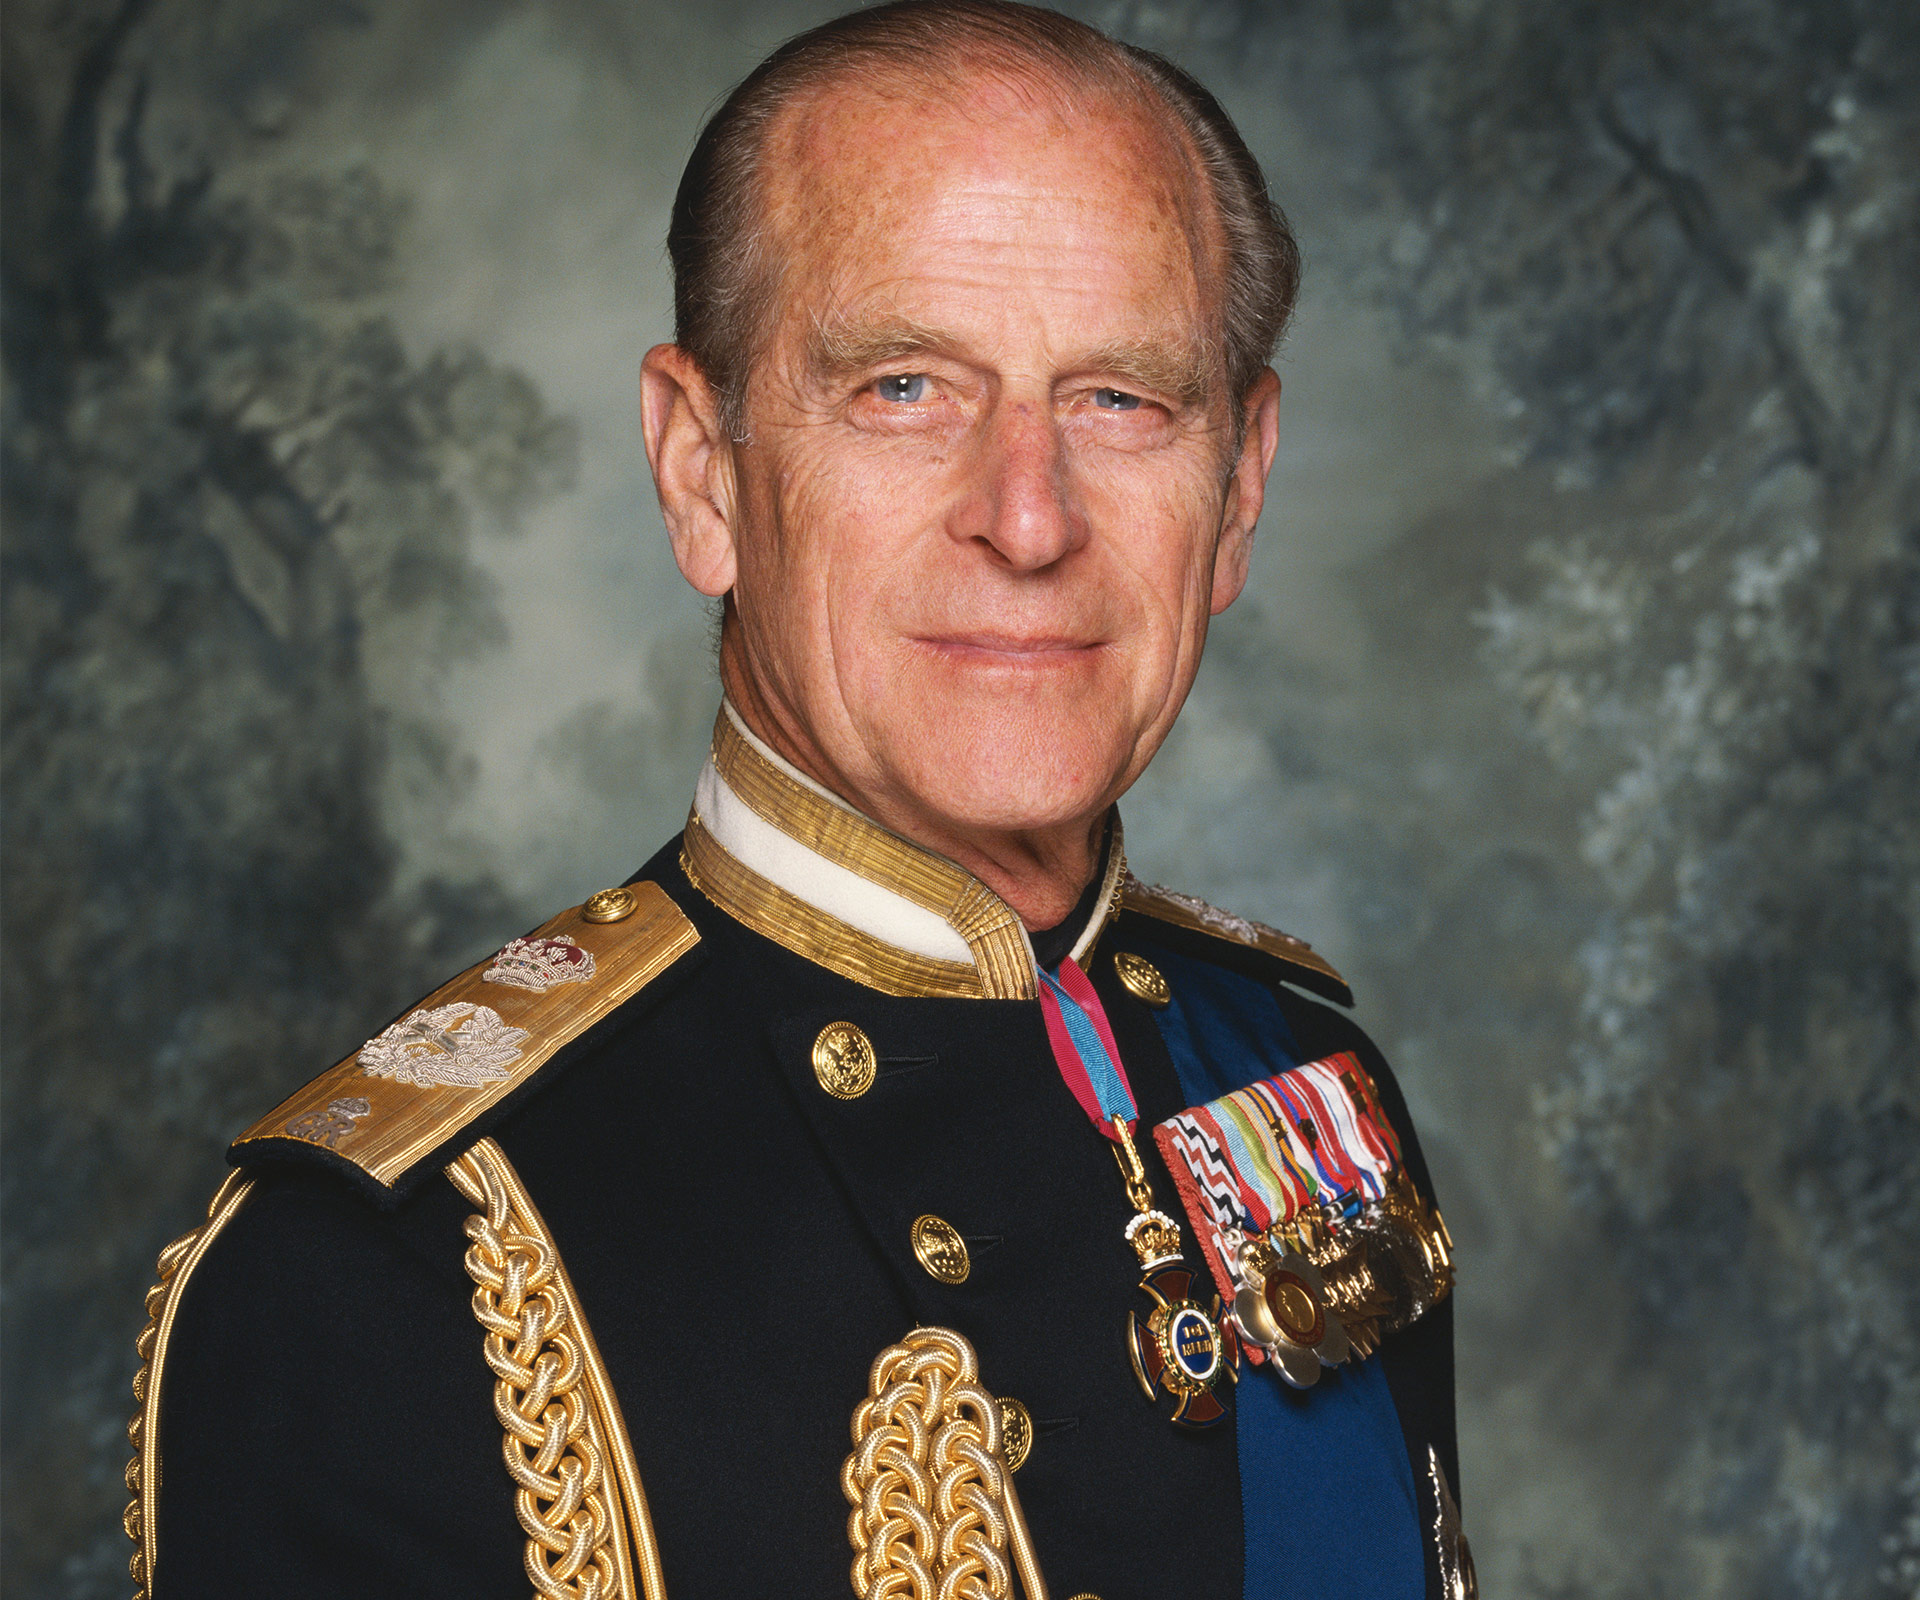 Prince Philip, the Duke of Edinburgh: A royal retrospective on Queen Elizabeth II’s husband